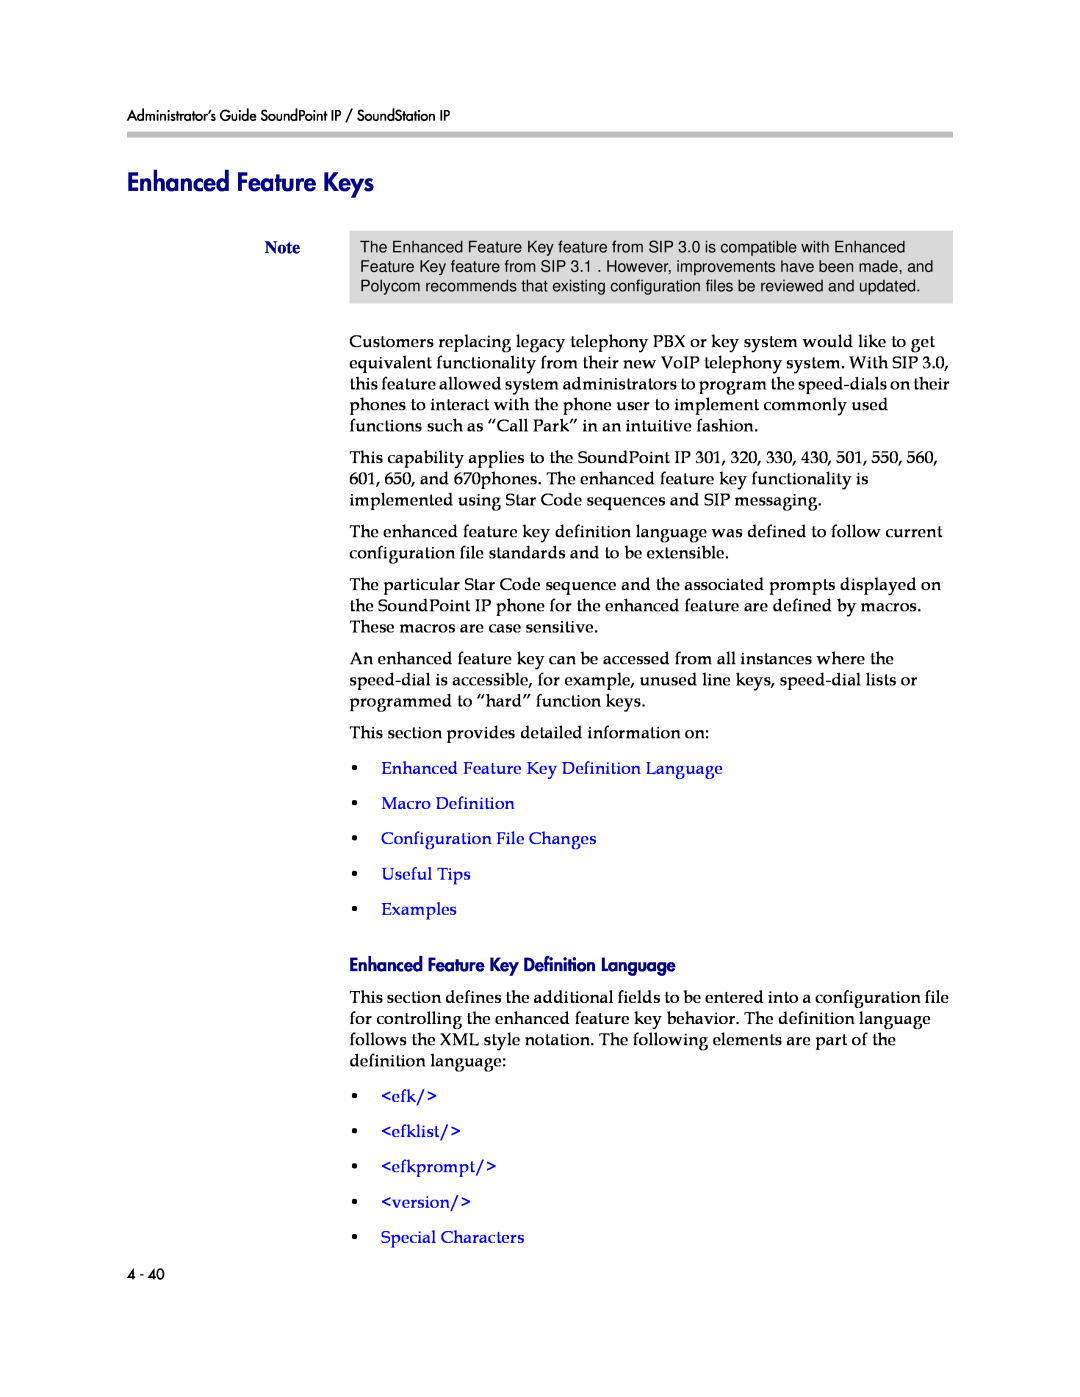 Polycom SIP 3.1 manual Enhanced Feature Keys, Enhanced Feature Key Definition Language Macro Definition 